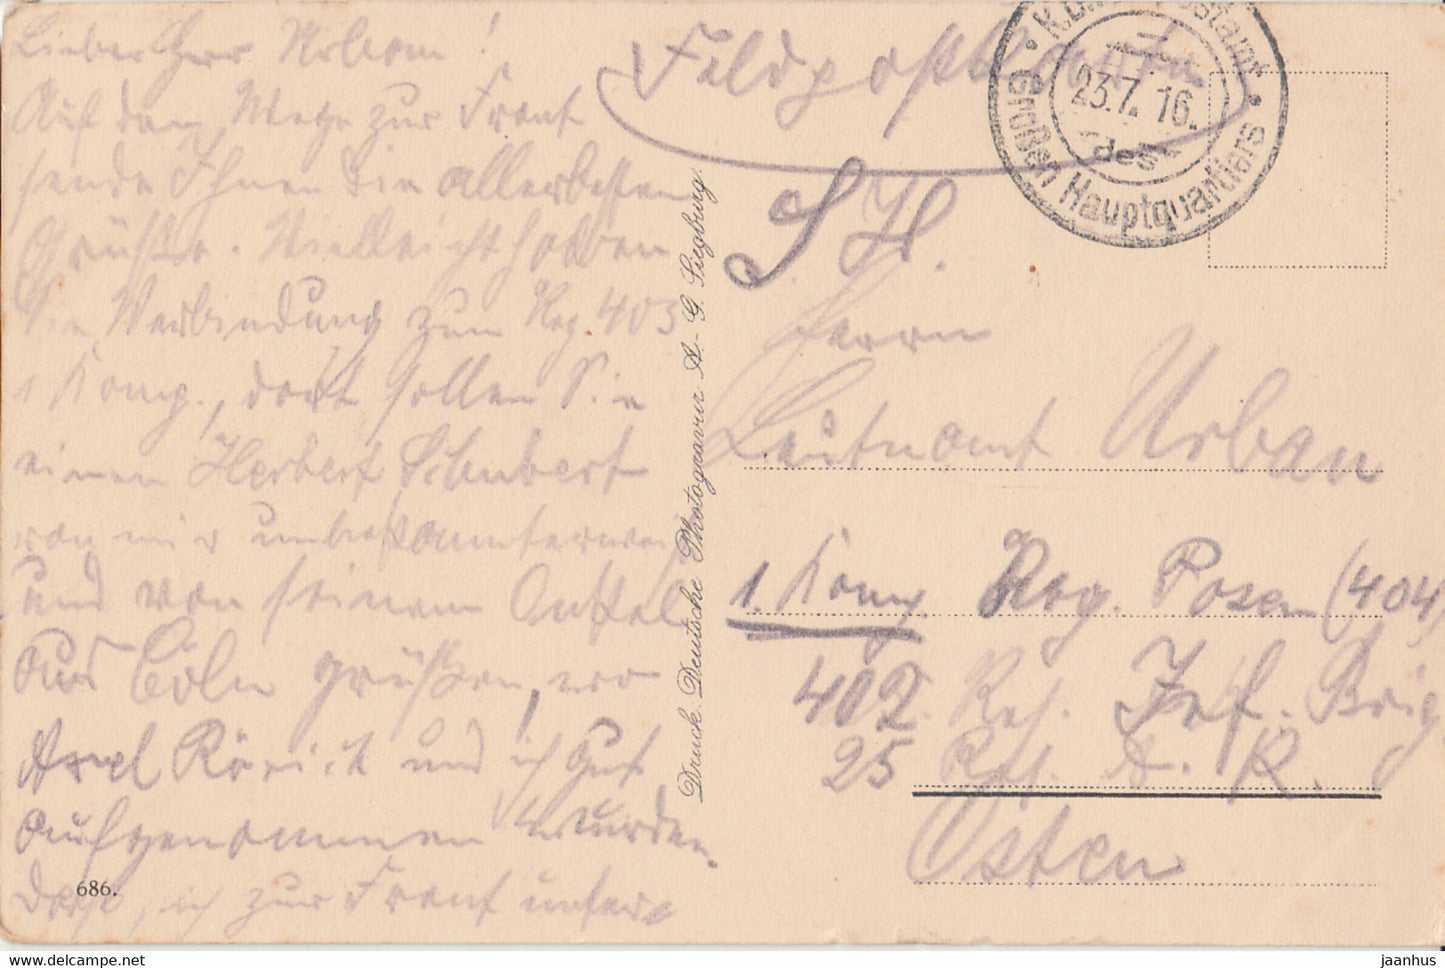 Koln a Rhein - Dom - Sudseite - Feldpost - old postcard - 1916 - Germany - used